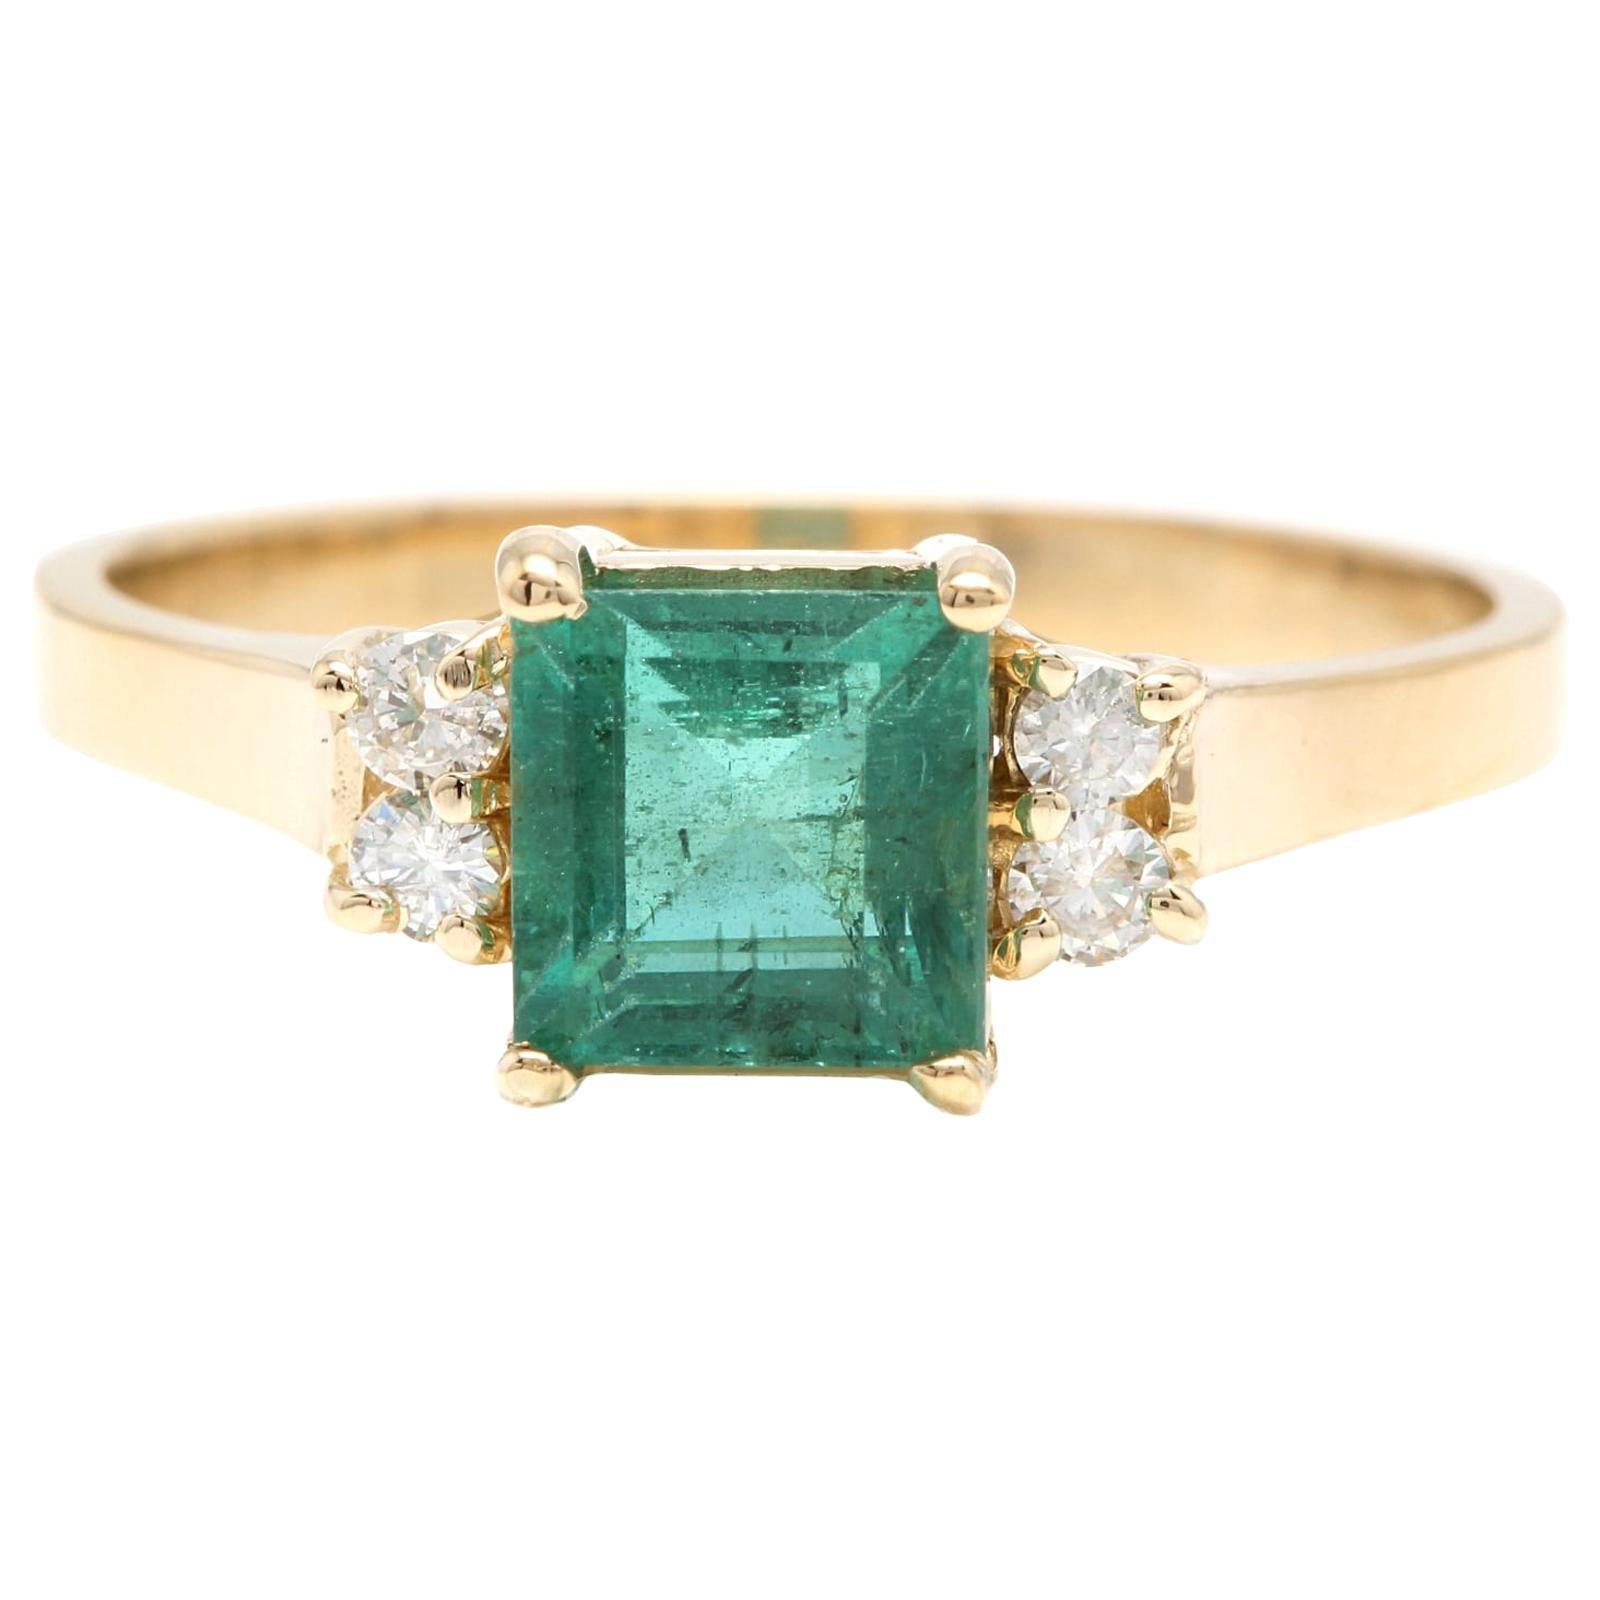 2.15 Carat Natural Emerald and Diamond 14 Karat Solid Yellow Gold Ring